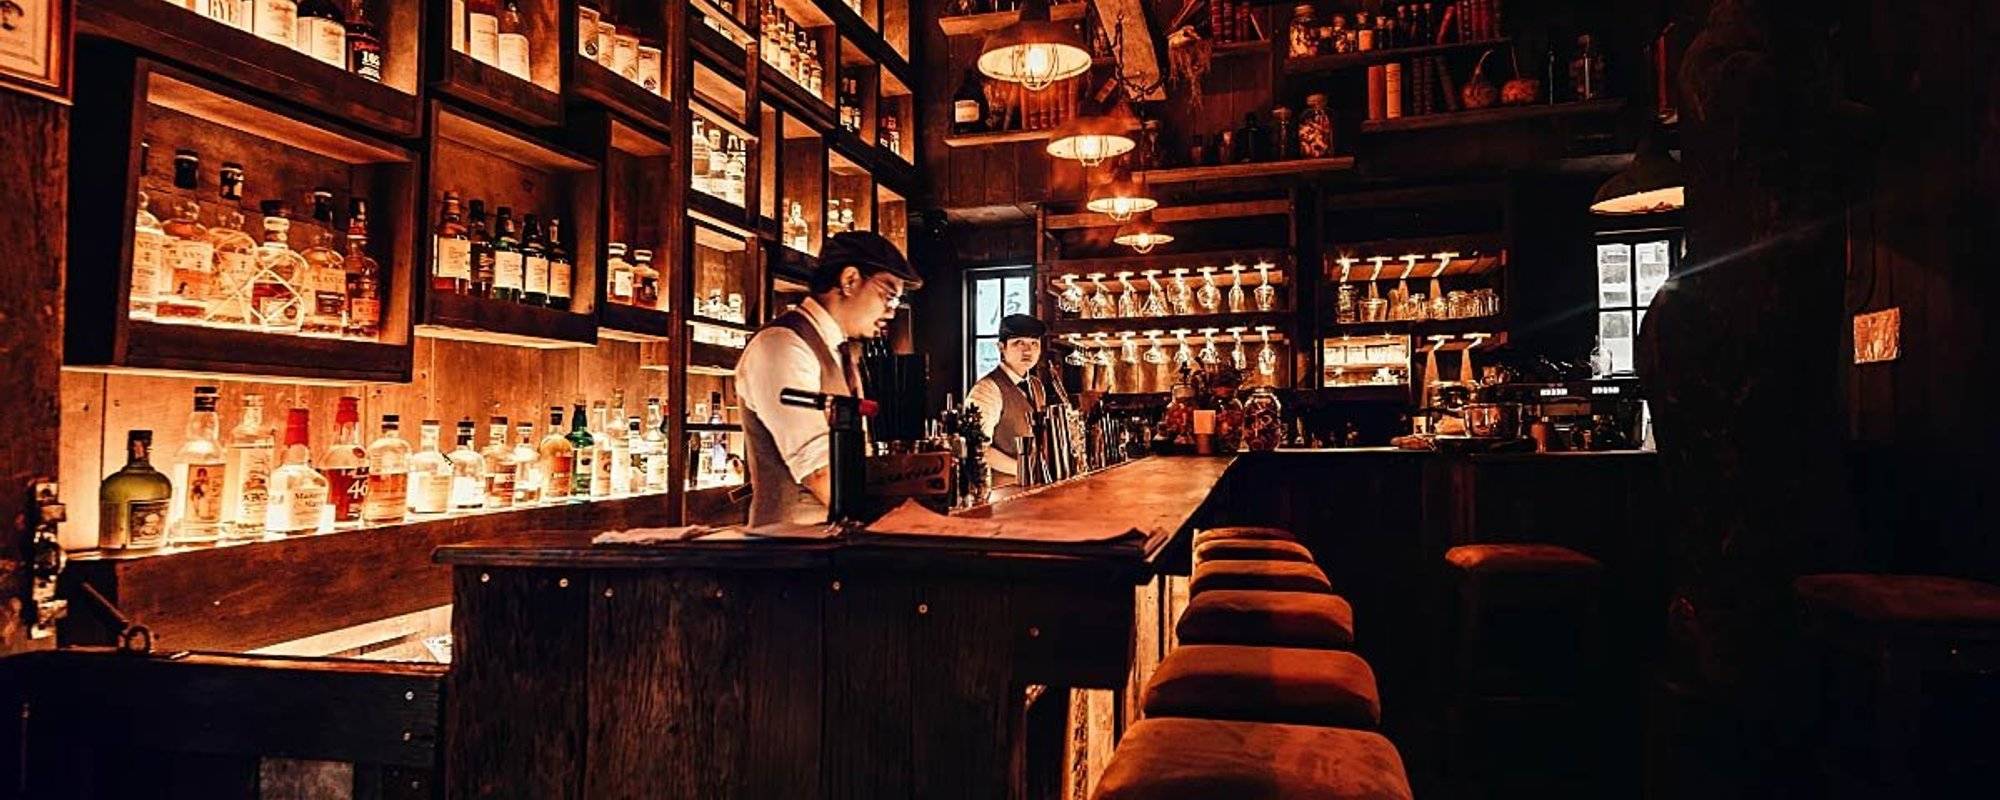 The WoodShed bar Bangkok - Jazz bar review